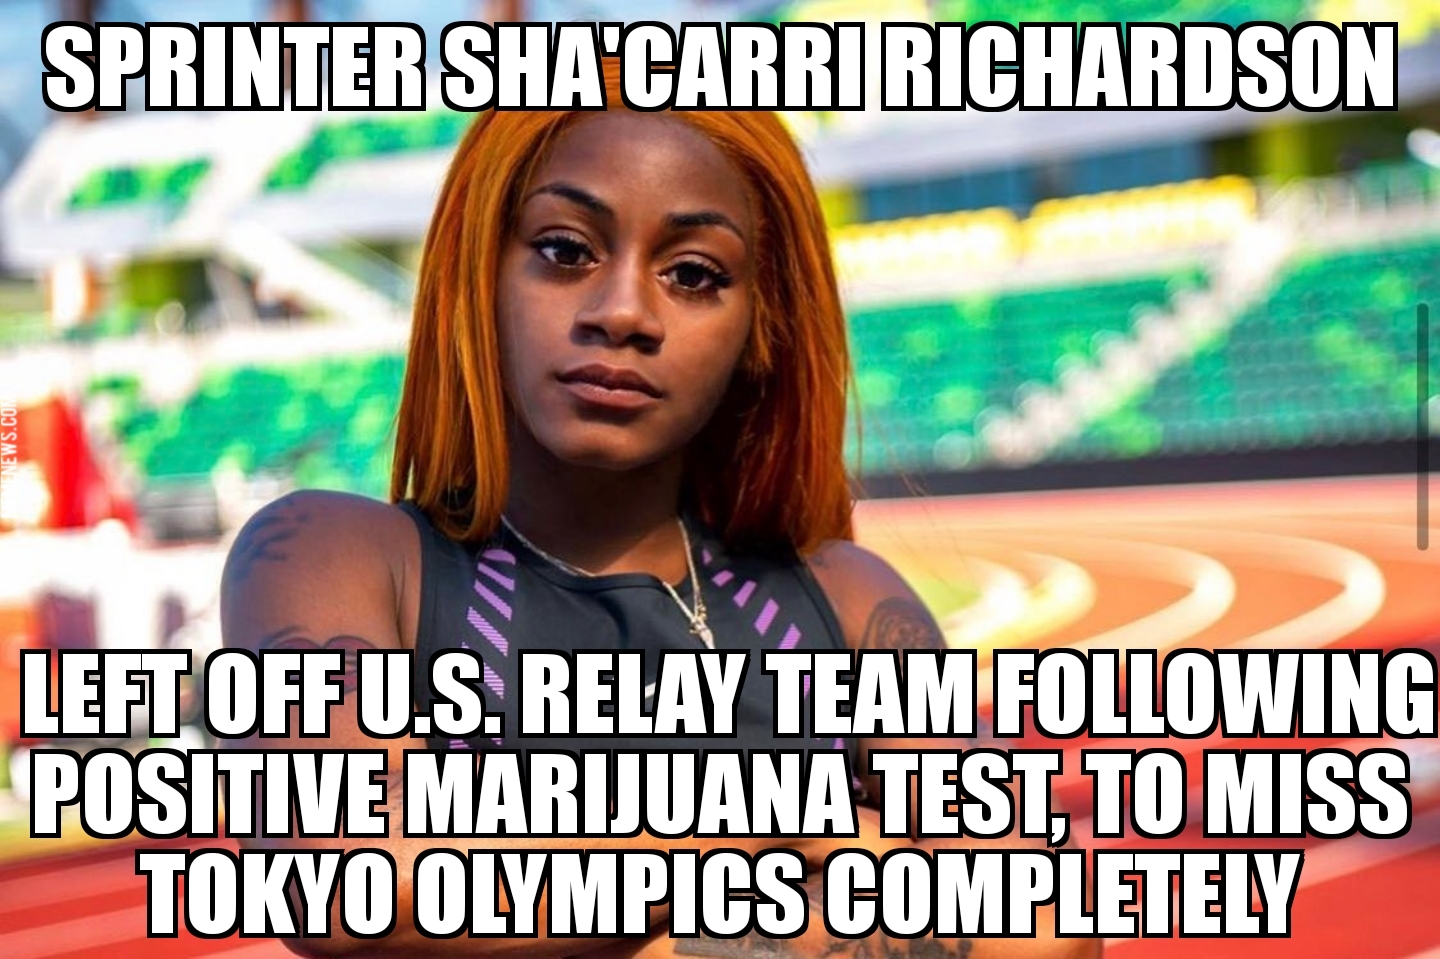 Sha’Carri Richardson to miss Olympics